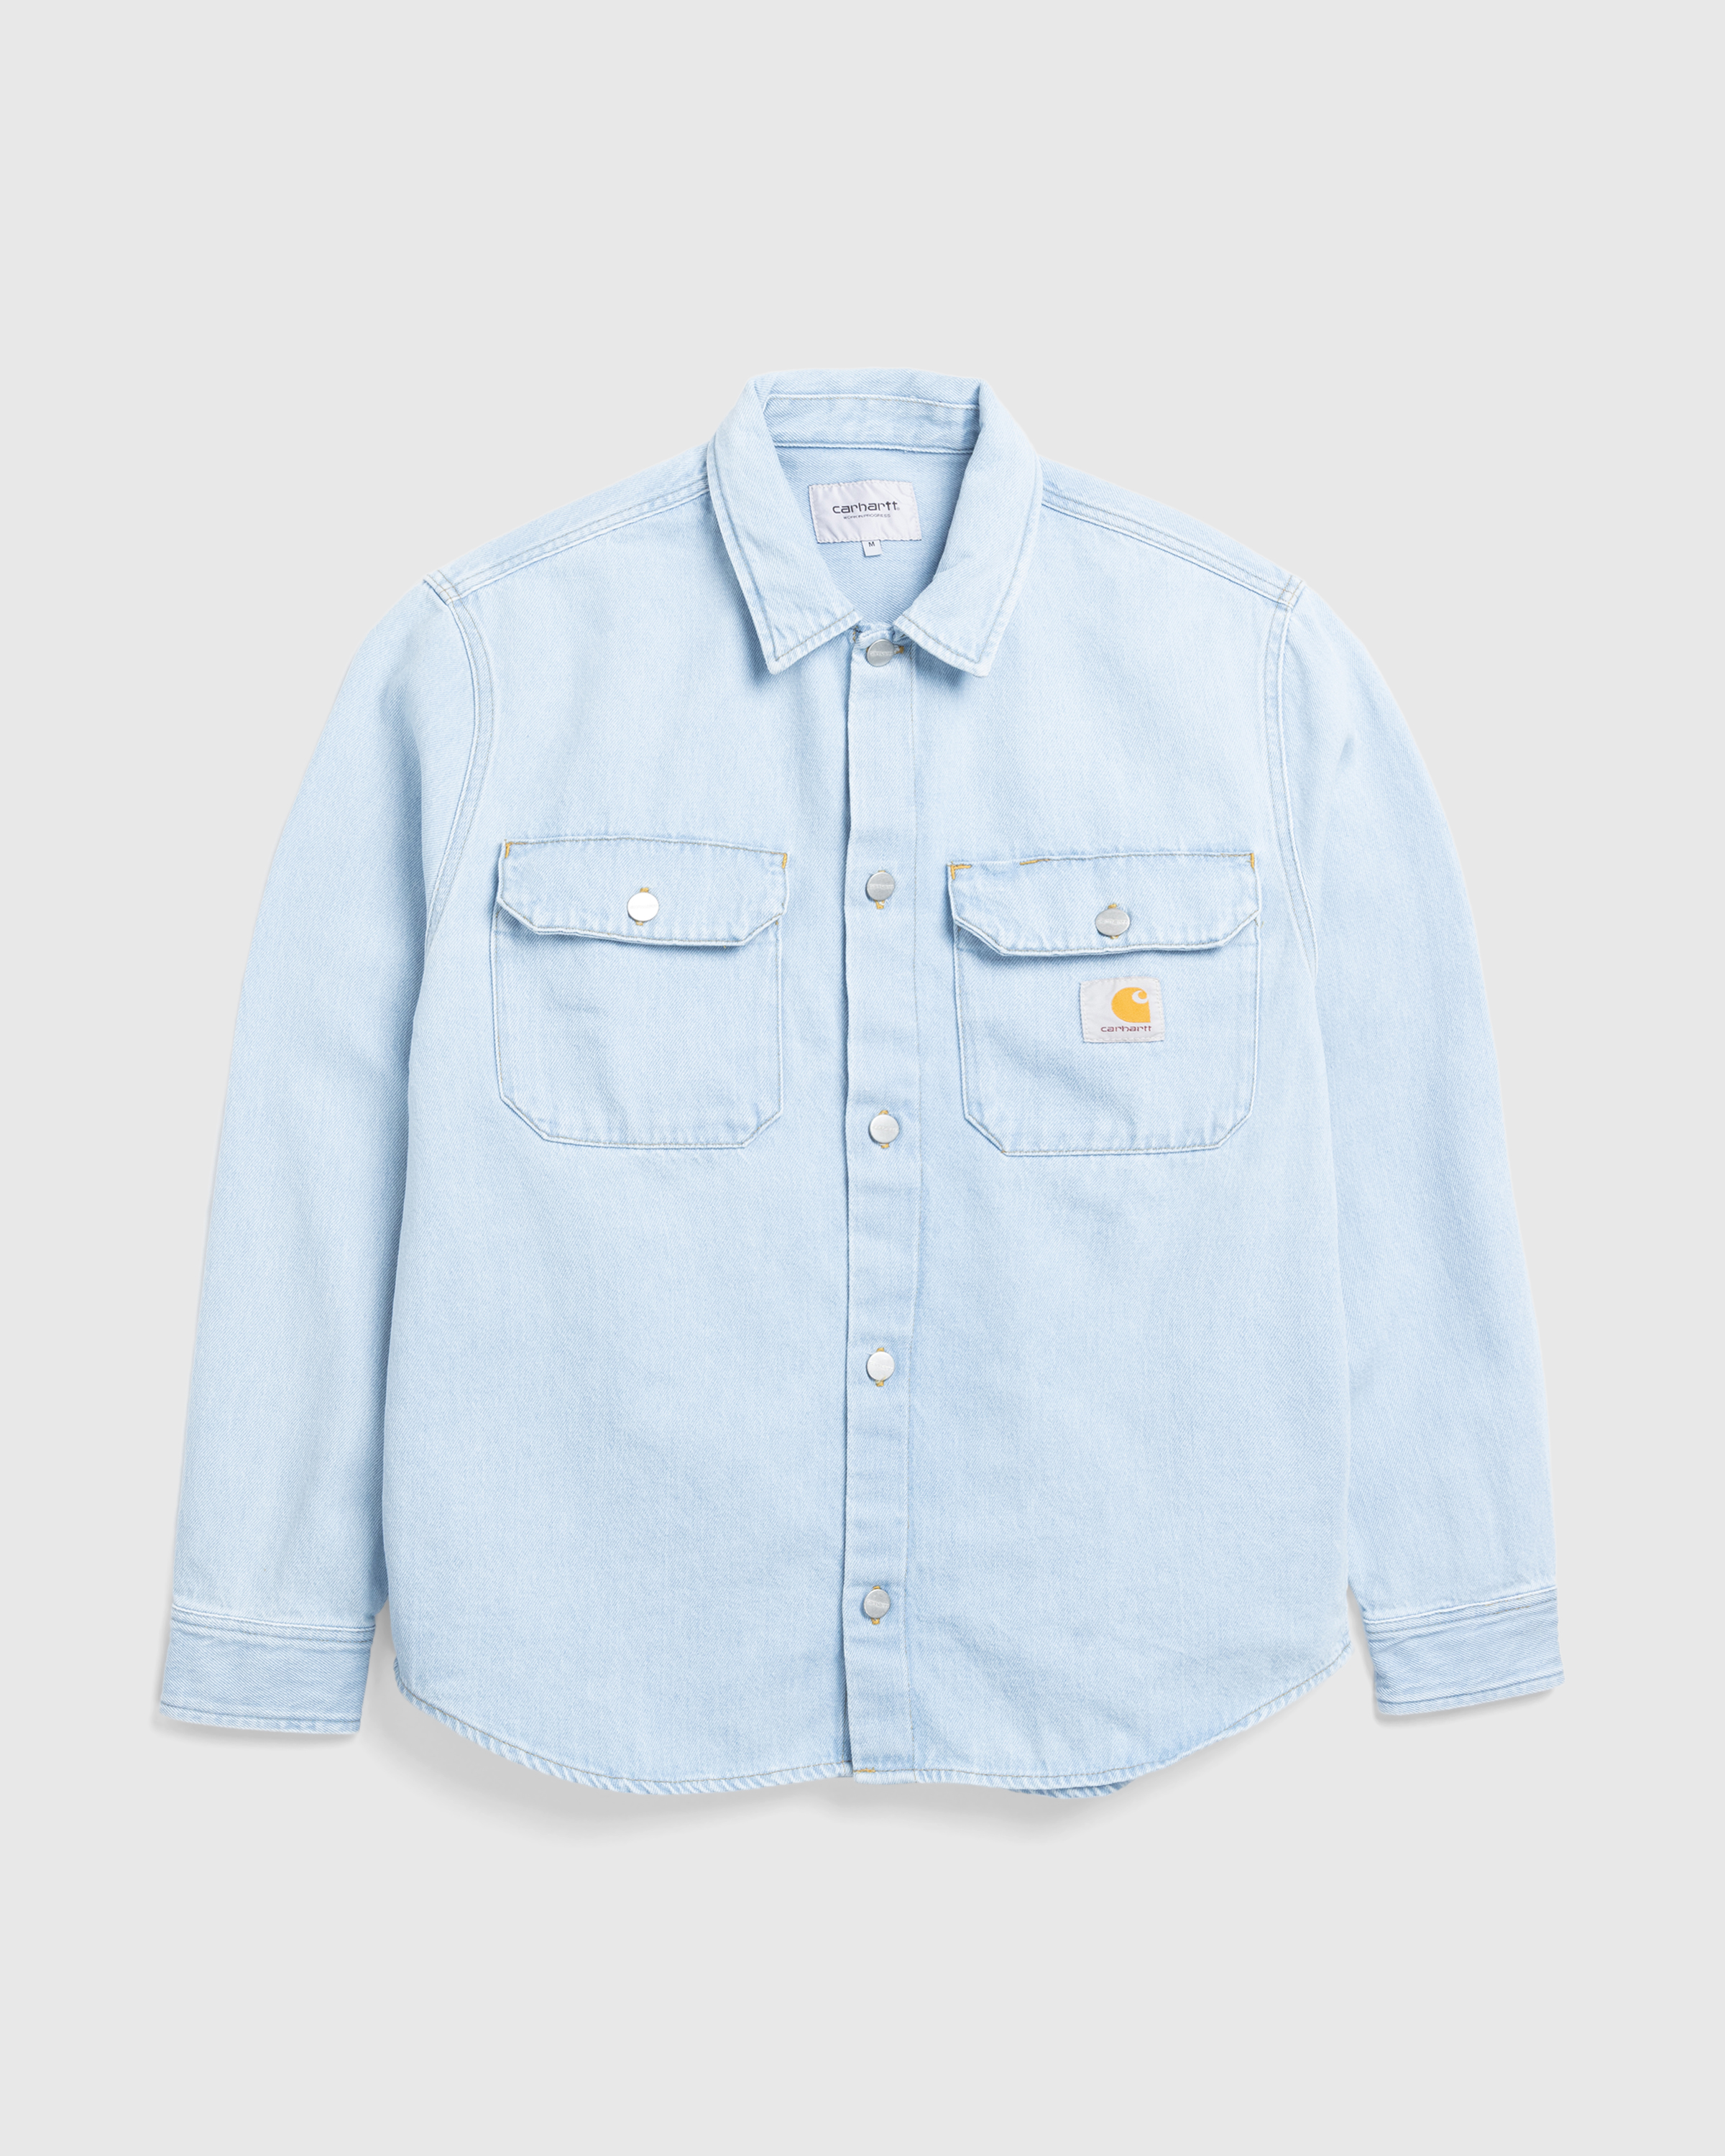 Carhartt WIP – Harvey Shirt Jacket Blue/Stone Bleached | Highsnobiety Shop